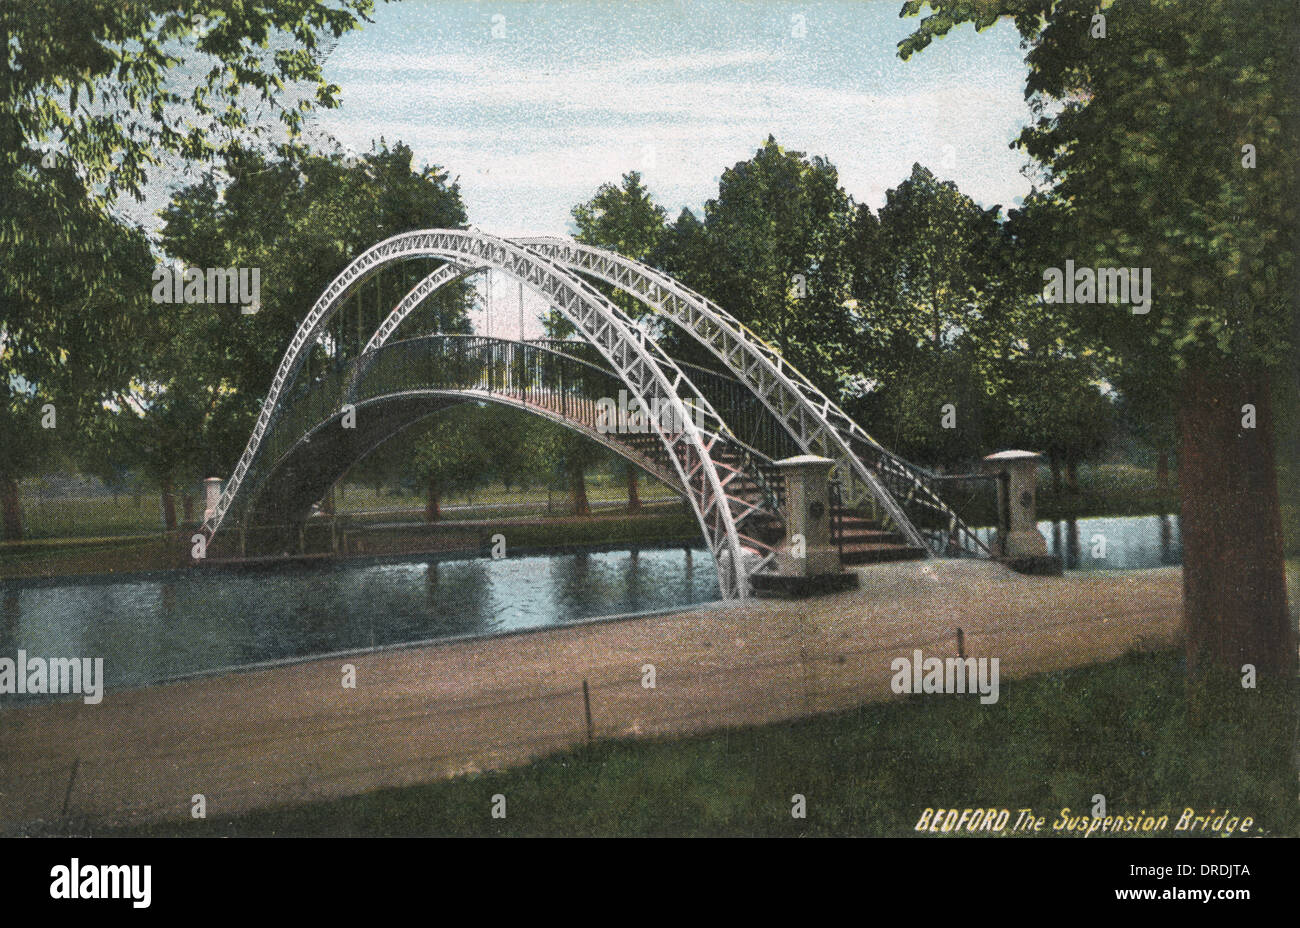 The Suspension Bridge - Bedford Stock Photo